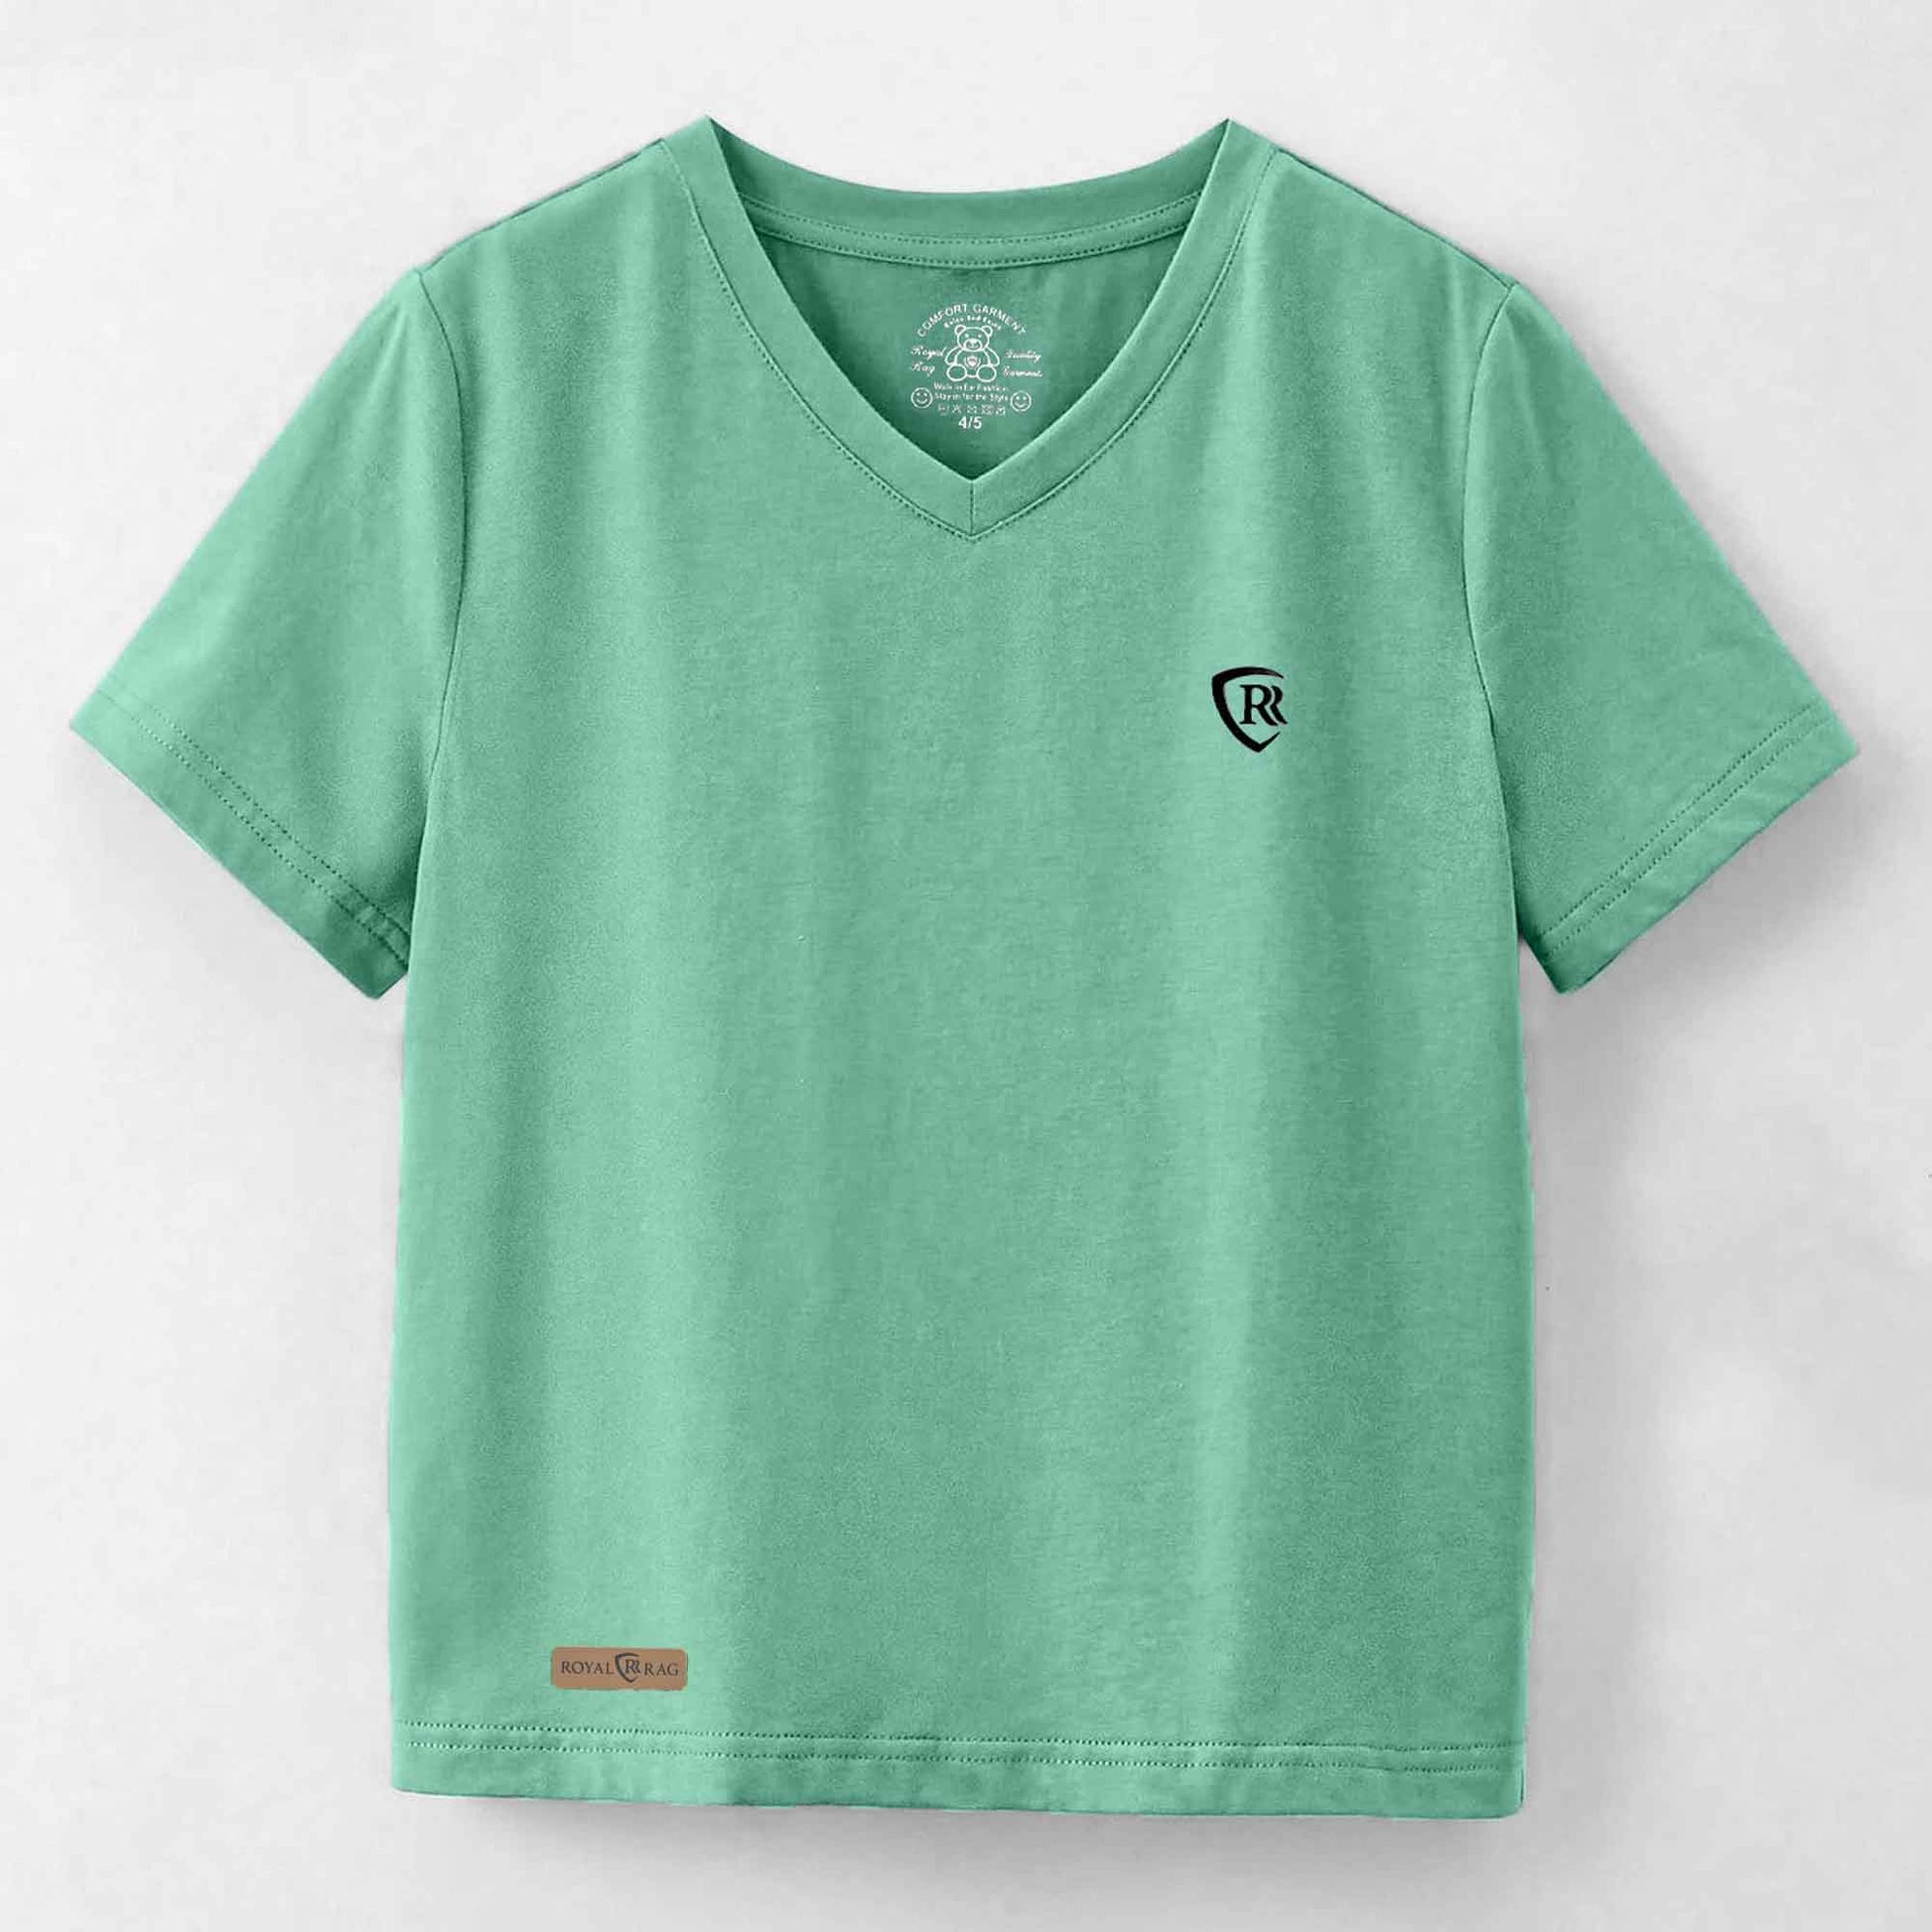 Royal Rag Boy's V-Neck T-Shirt - Classy Comfort Boy's Tee Shirt Usman Traders Aqua Green 2-3 Years 